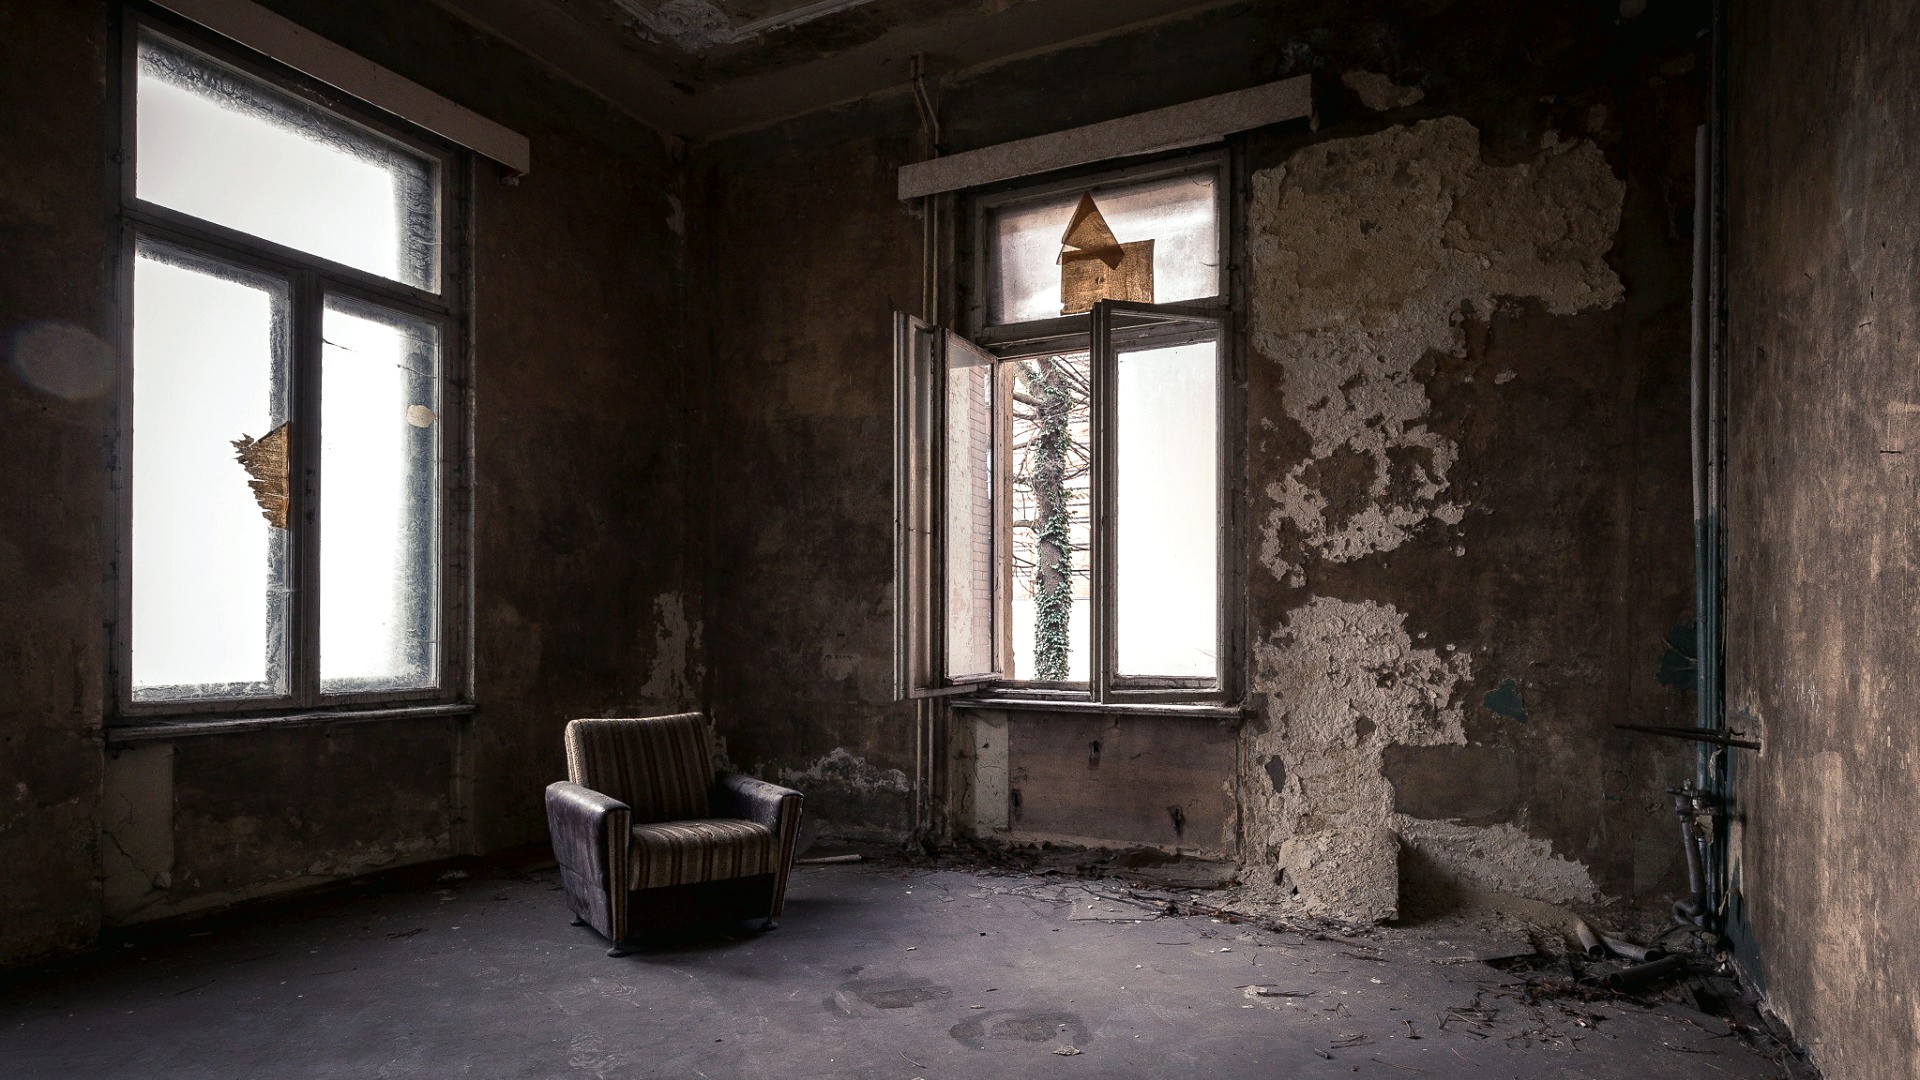 picture: ويندوز ، كرسي ، غرفة ، جميلة, beautiful (image)